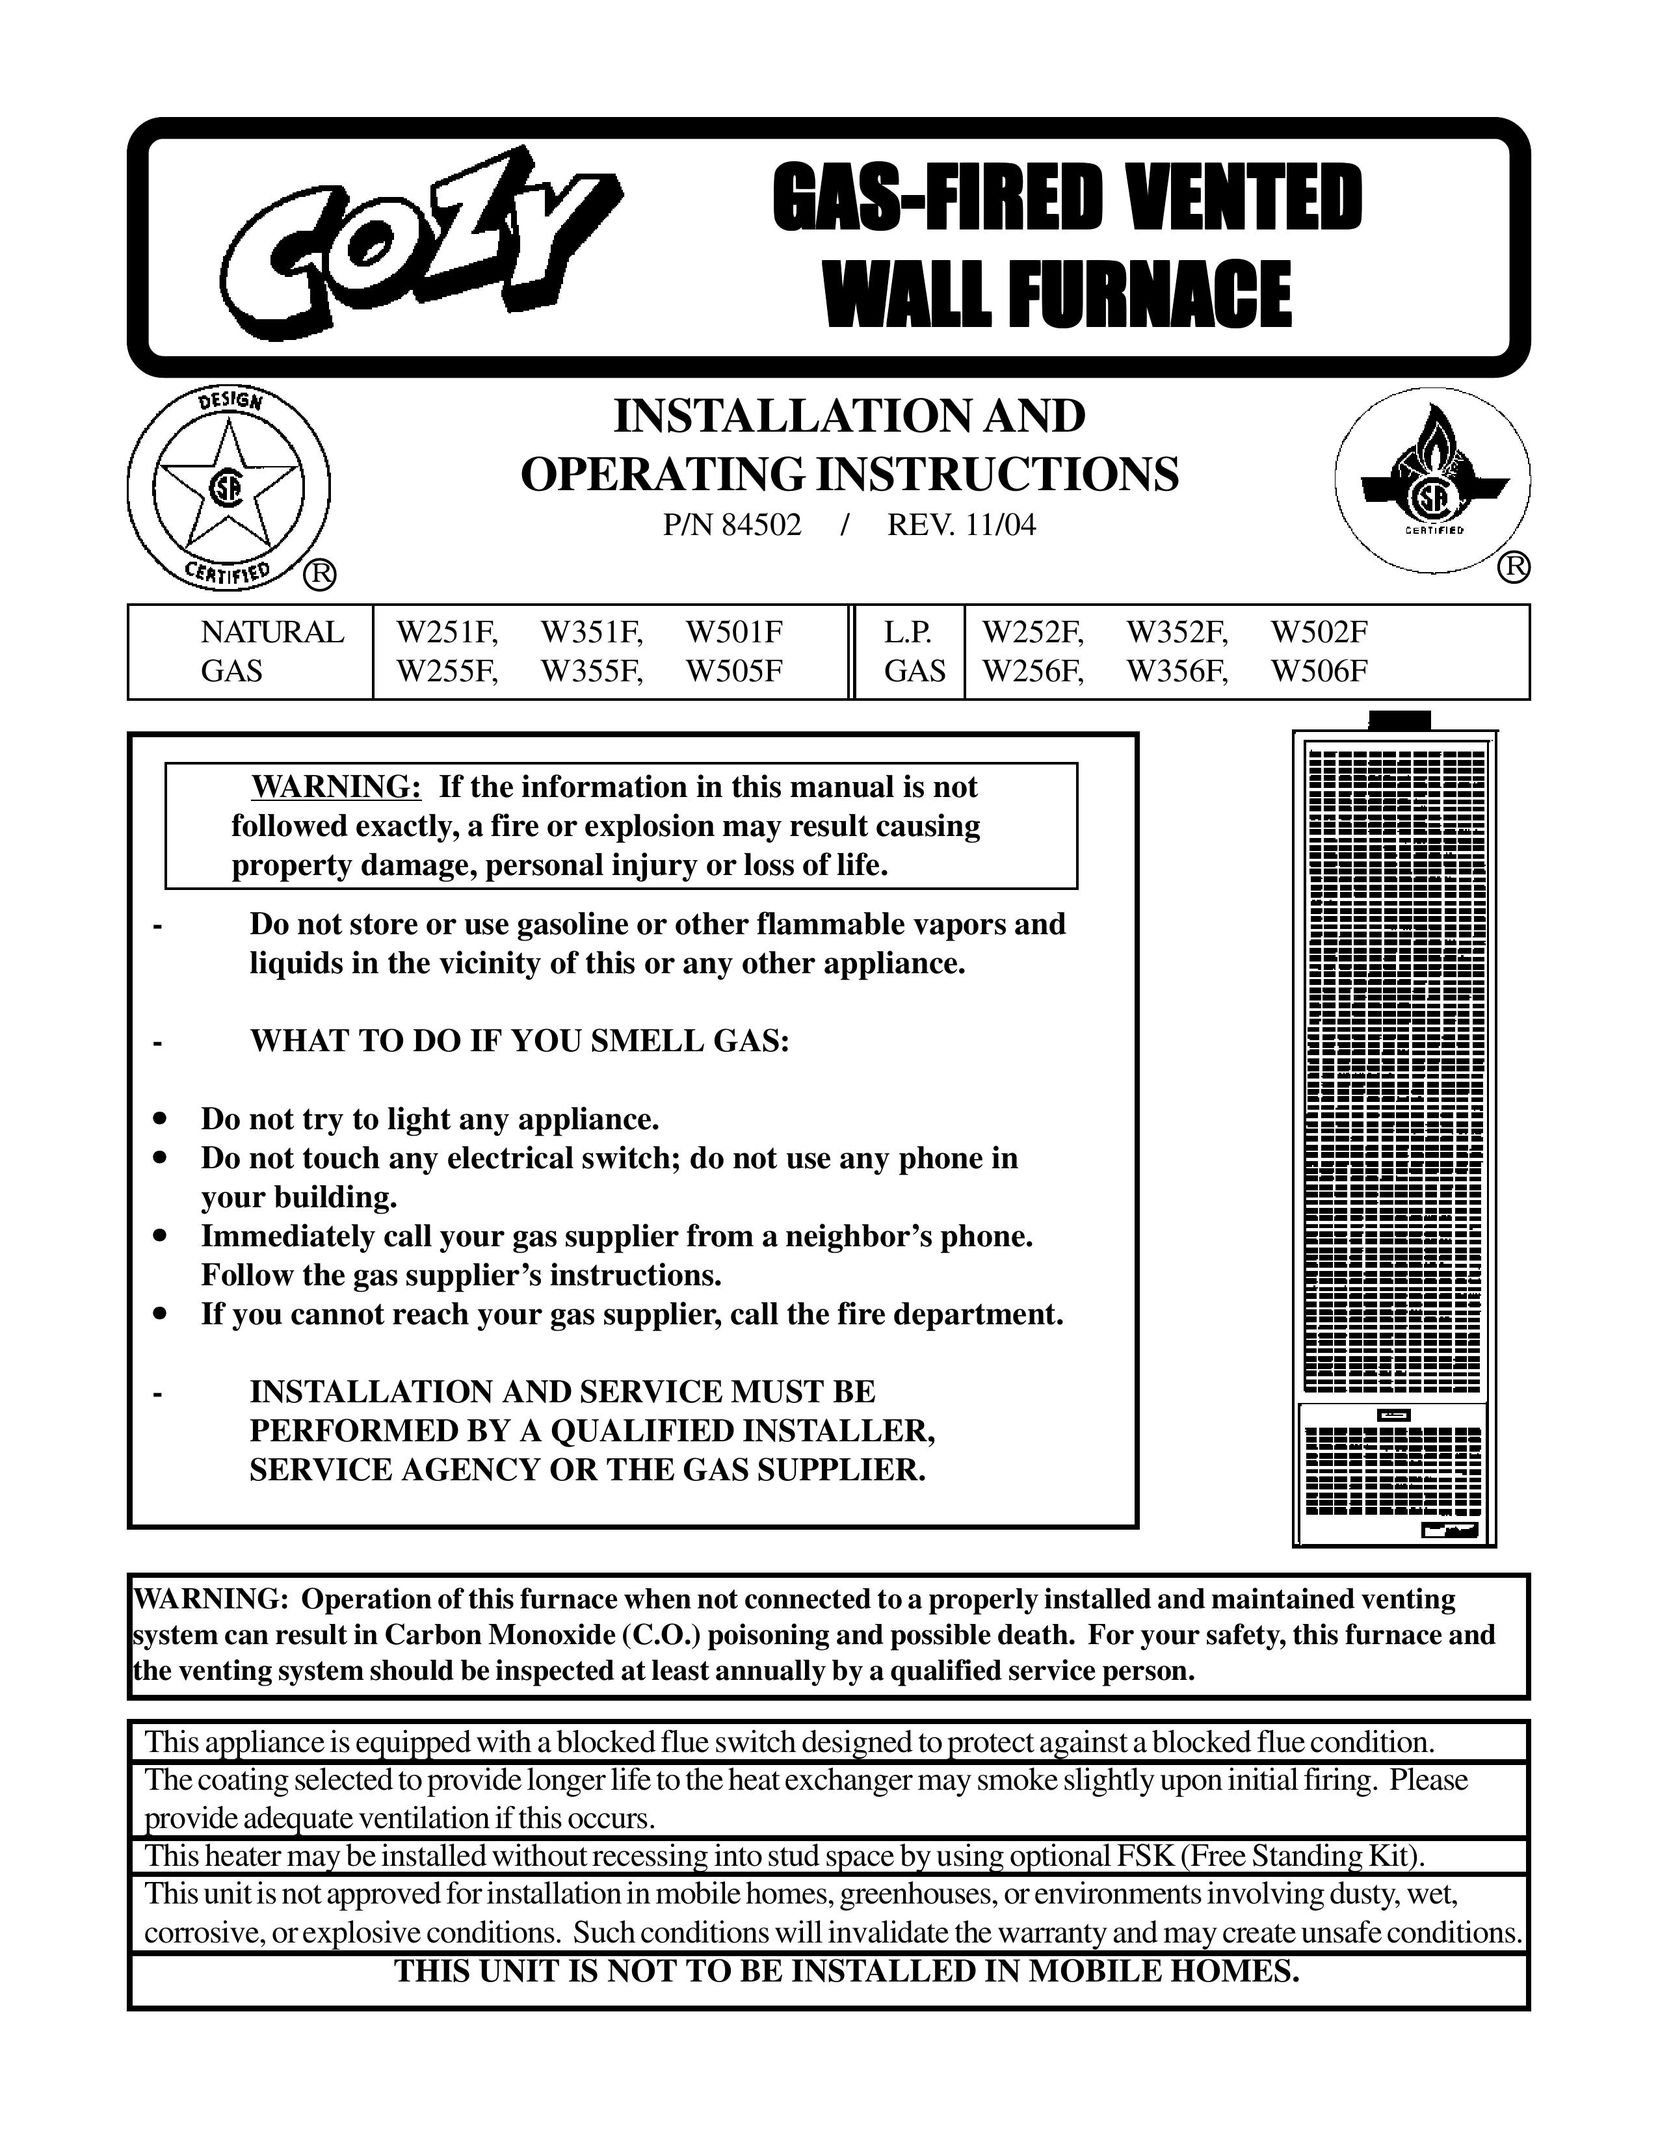 Louisville Tin and Stove W351F Furnace User Manual